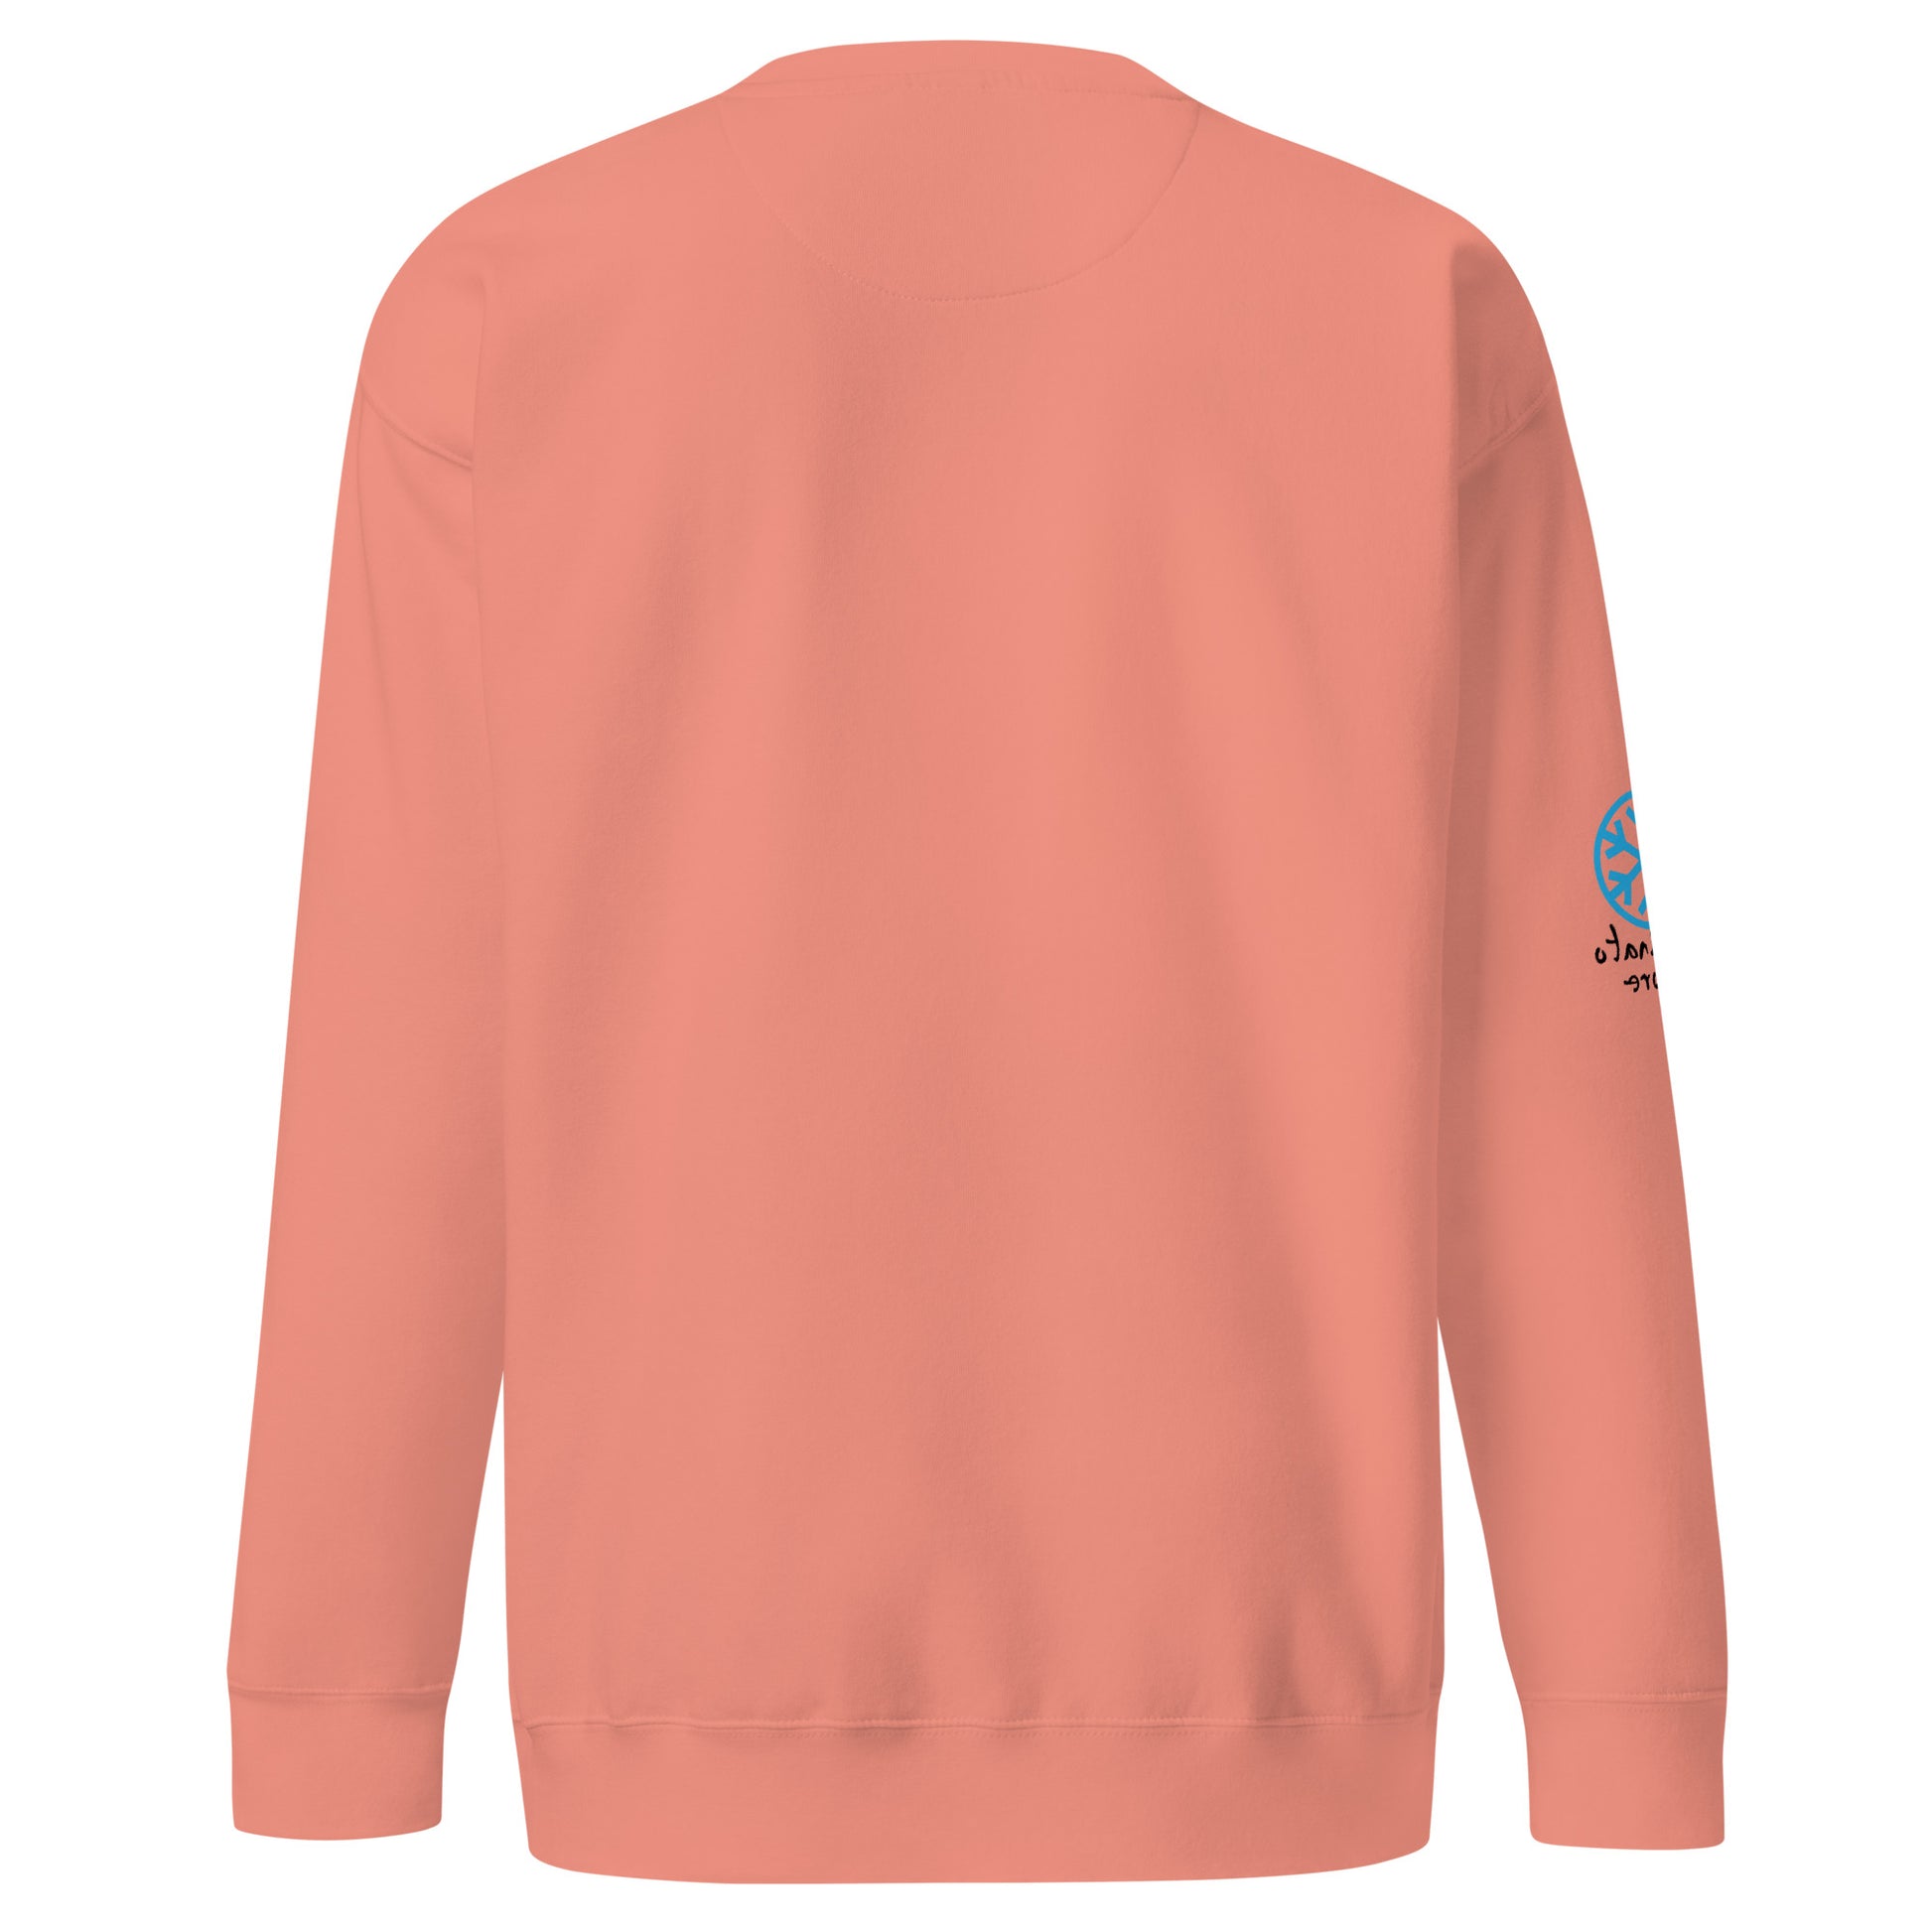 back of sweatshirt Leonardo pink by B.Different Clothing independent streetwear brand inspired by street art graffiti